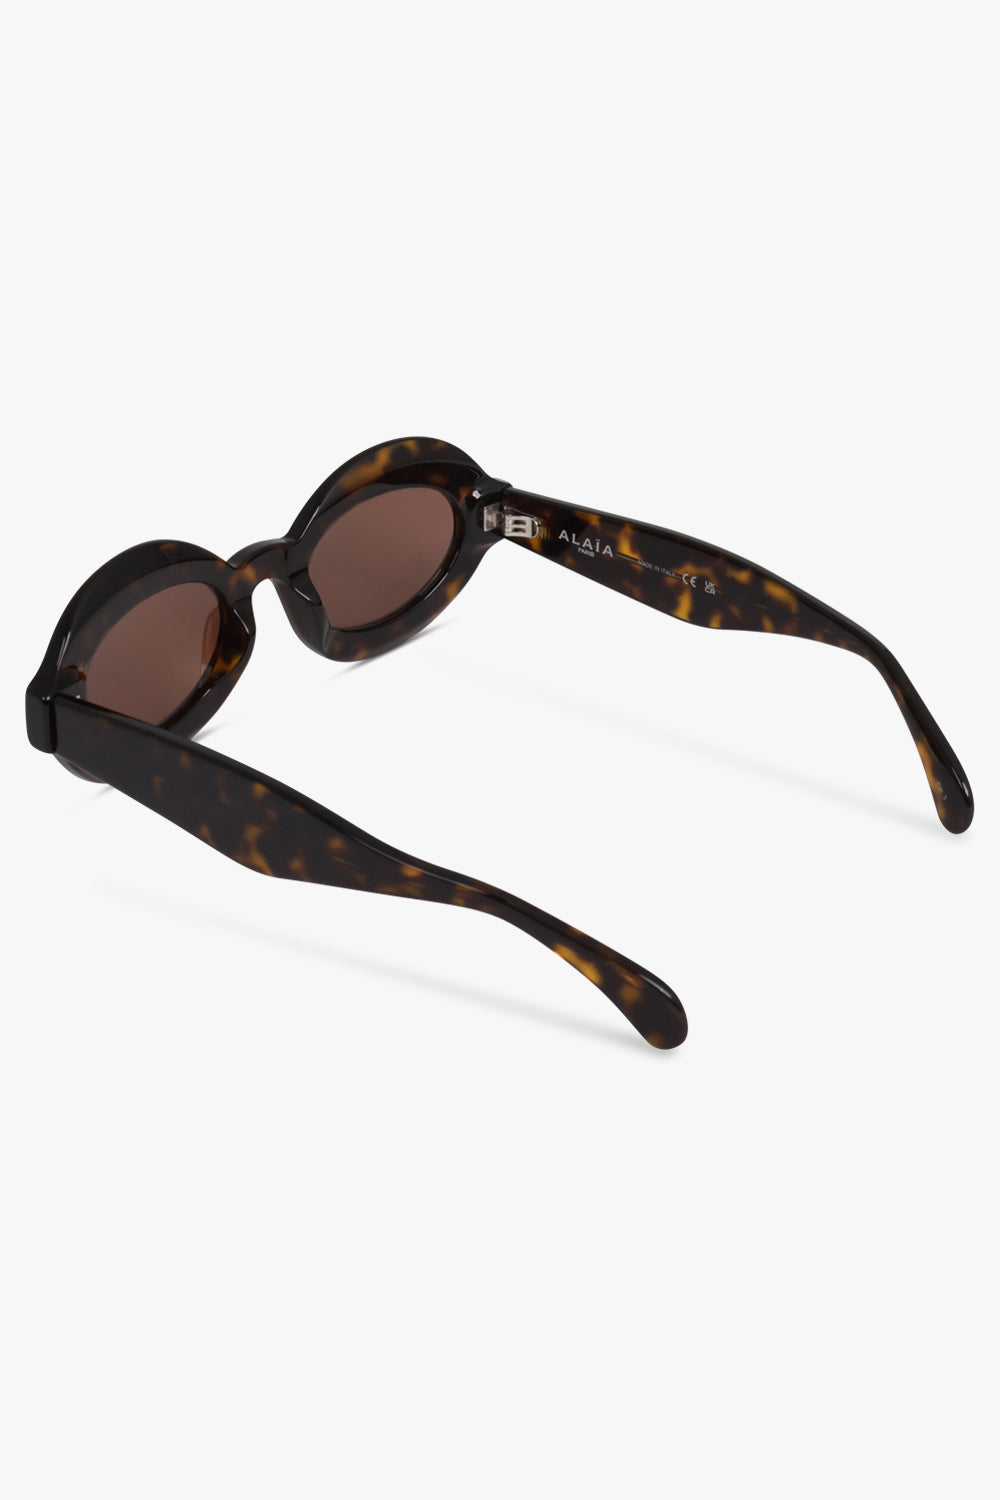 AZZEDINE ALA?A ACCESSORIES BLACK / BLACK-BLACK-GREY AA0059S Round Frame Black Lense Sunglasses | Black